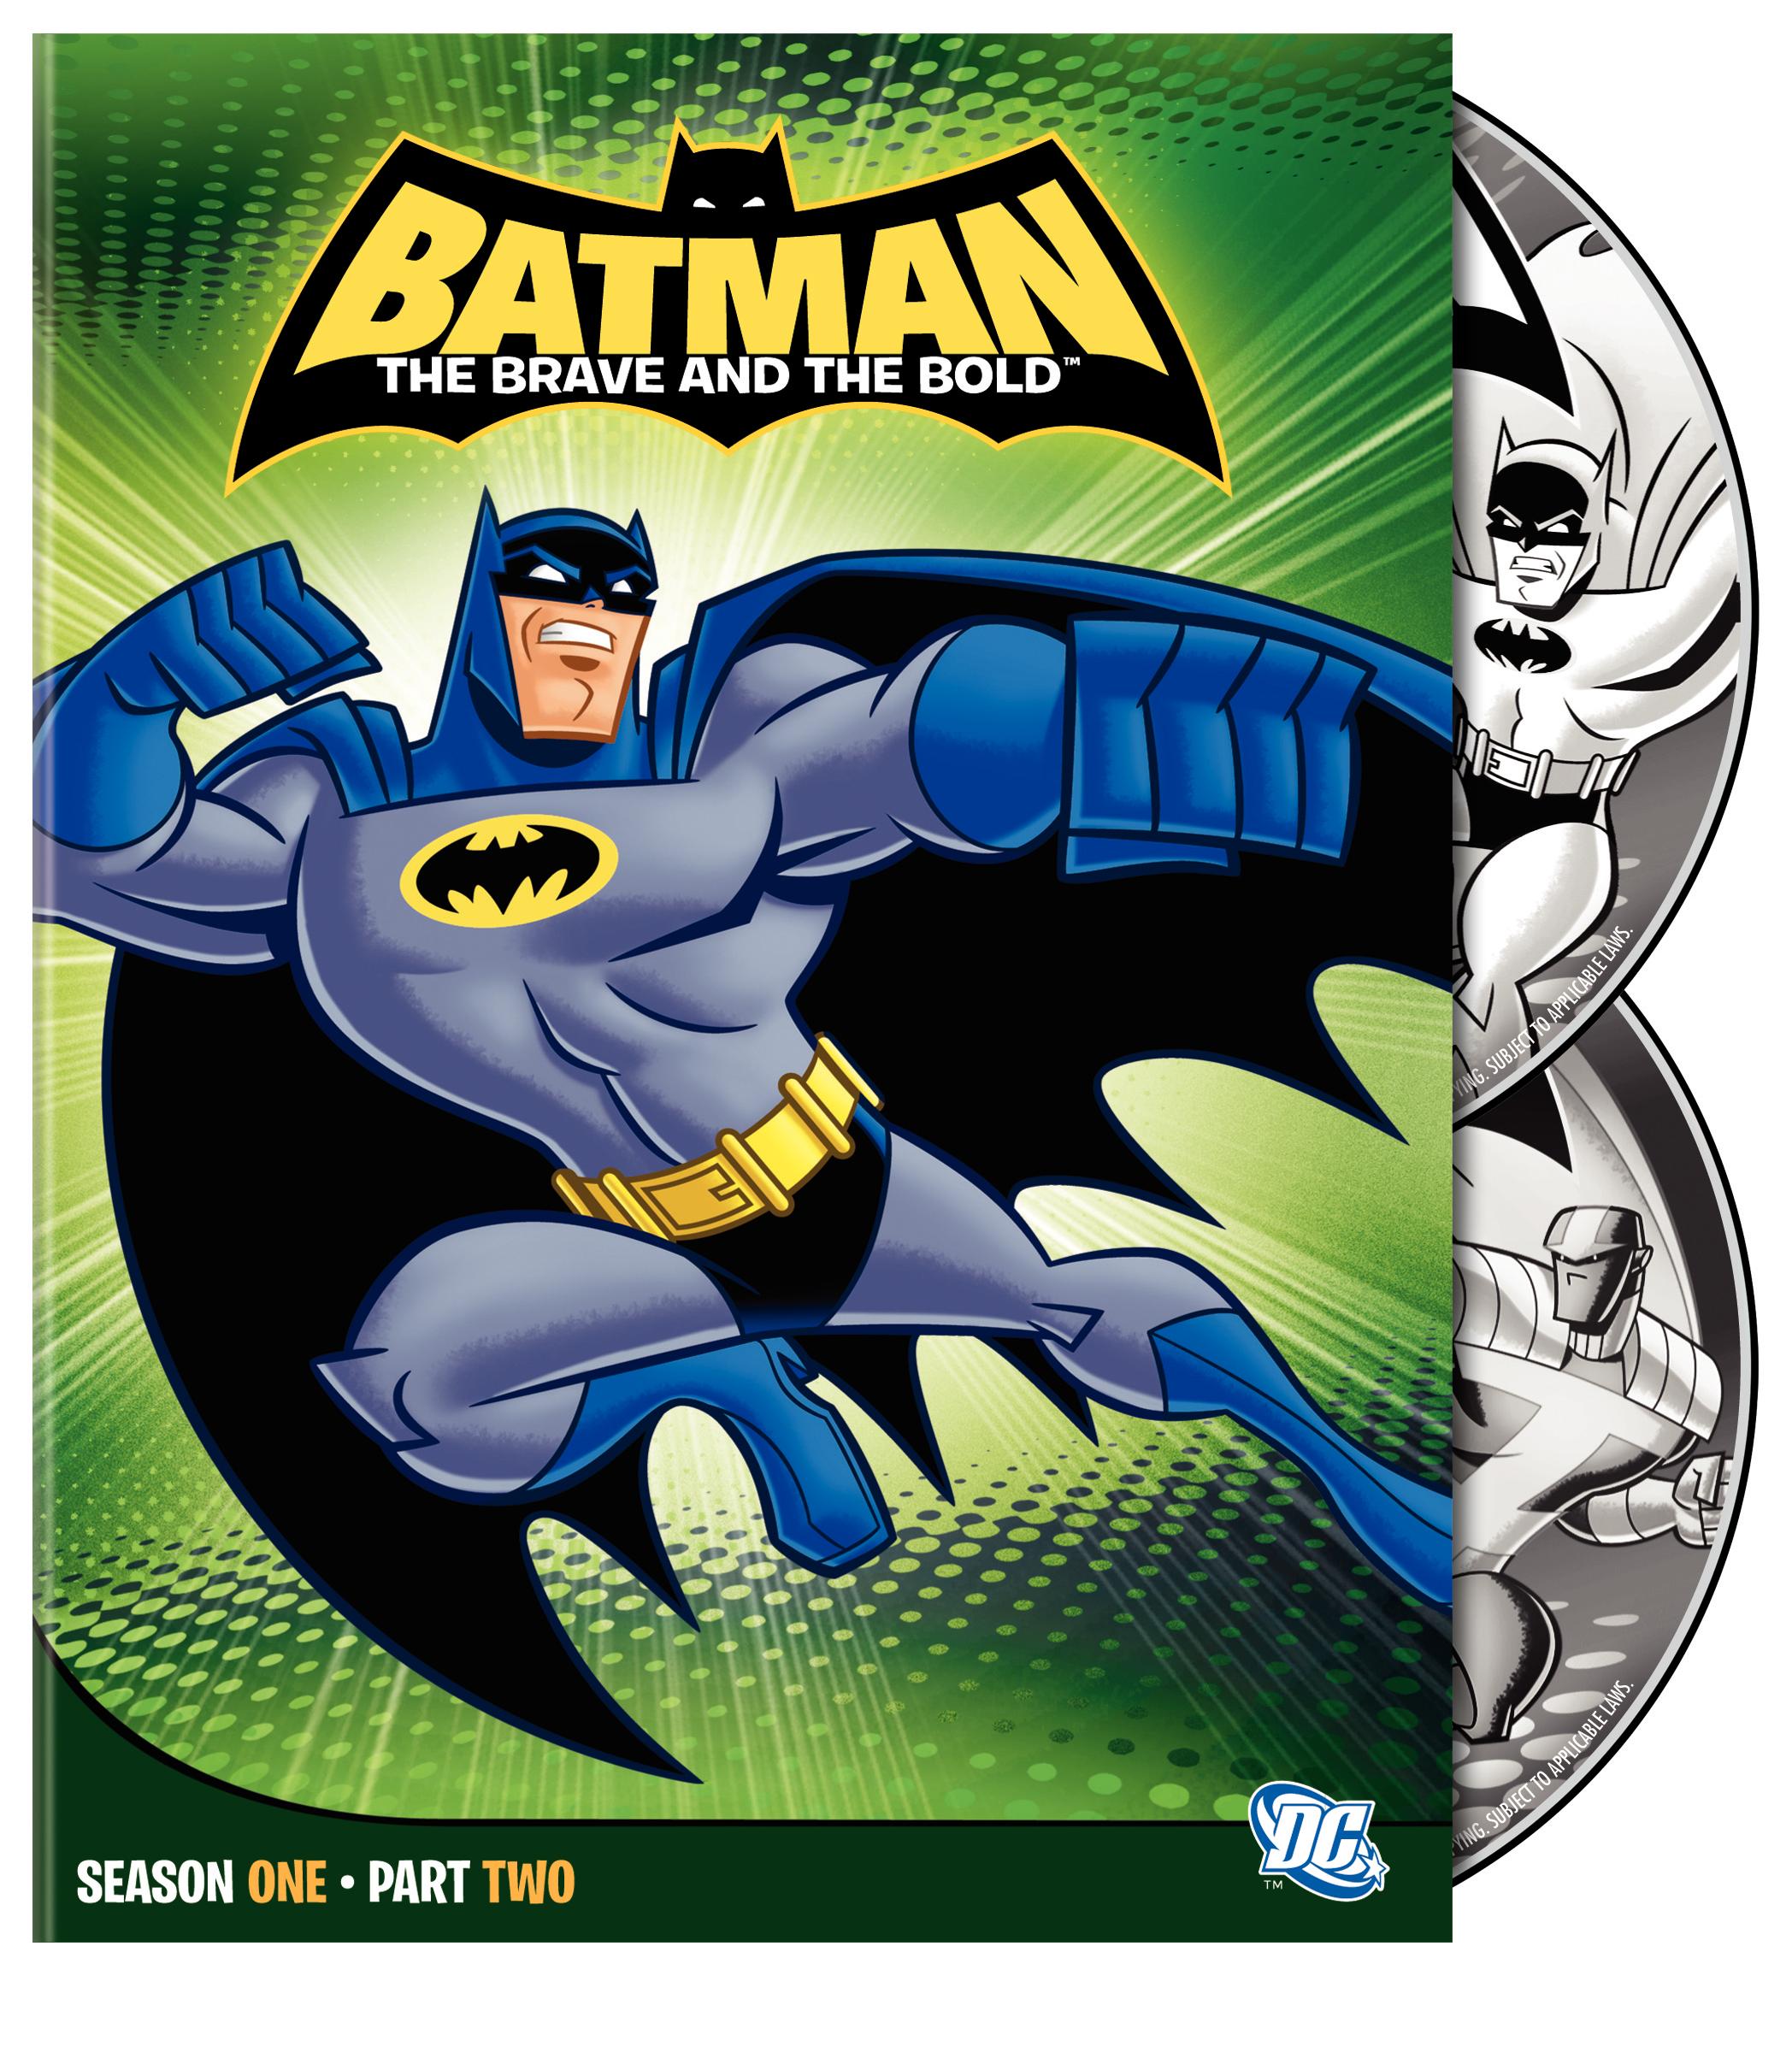 Batman: The Brave and the Bold Season 1 Part 2 DVD